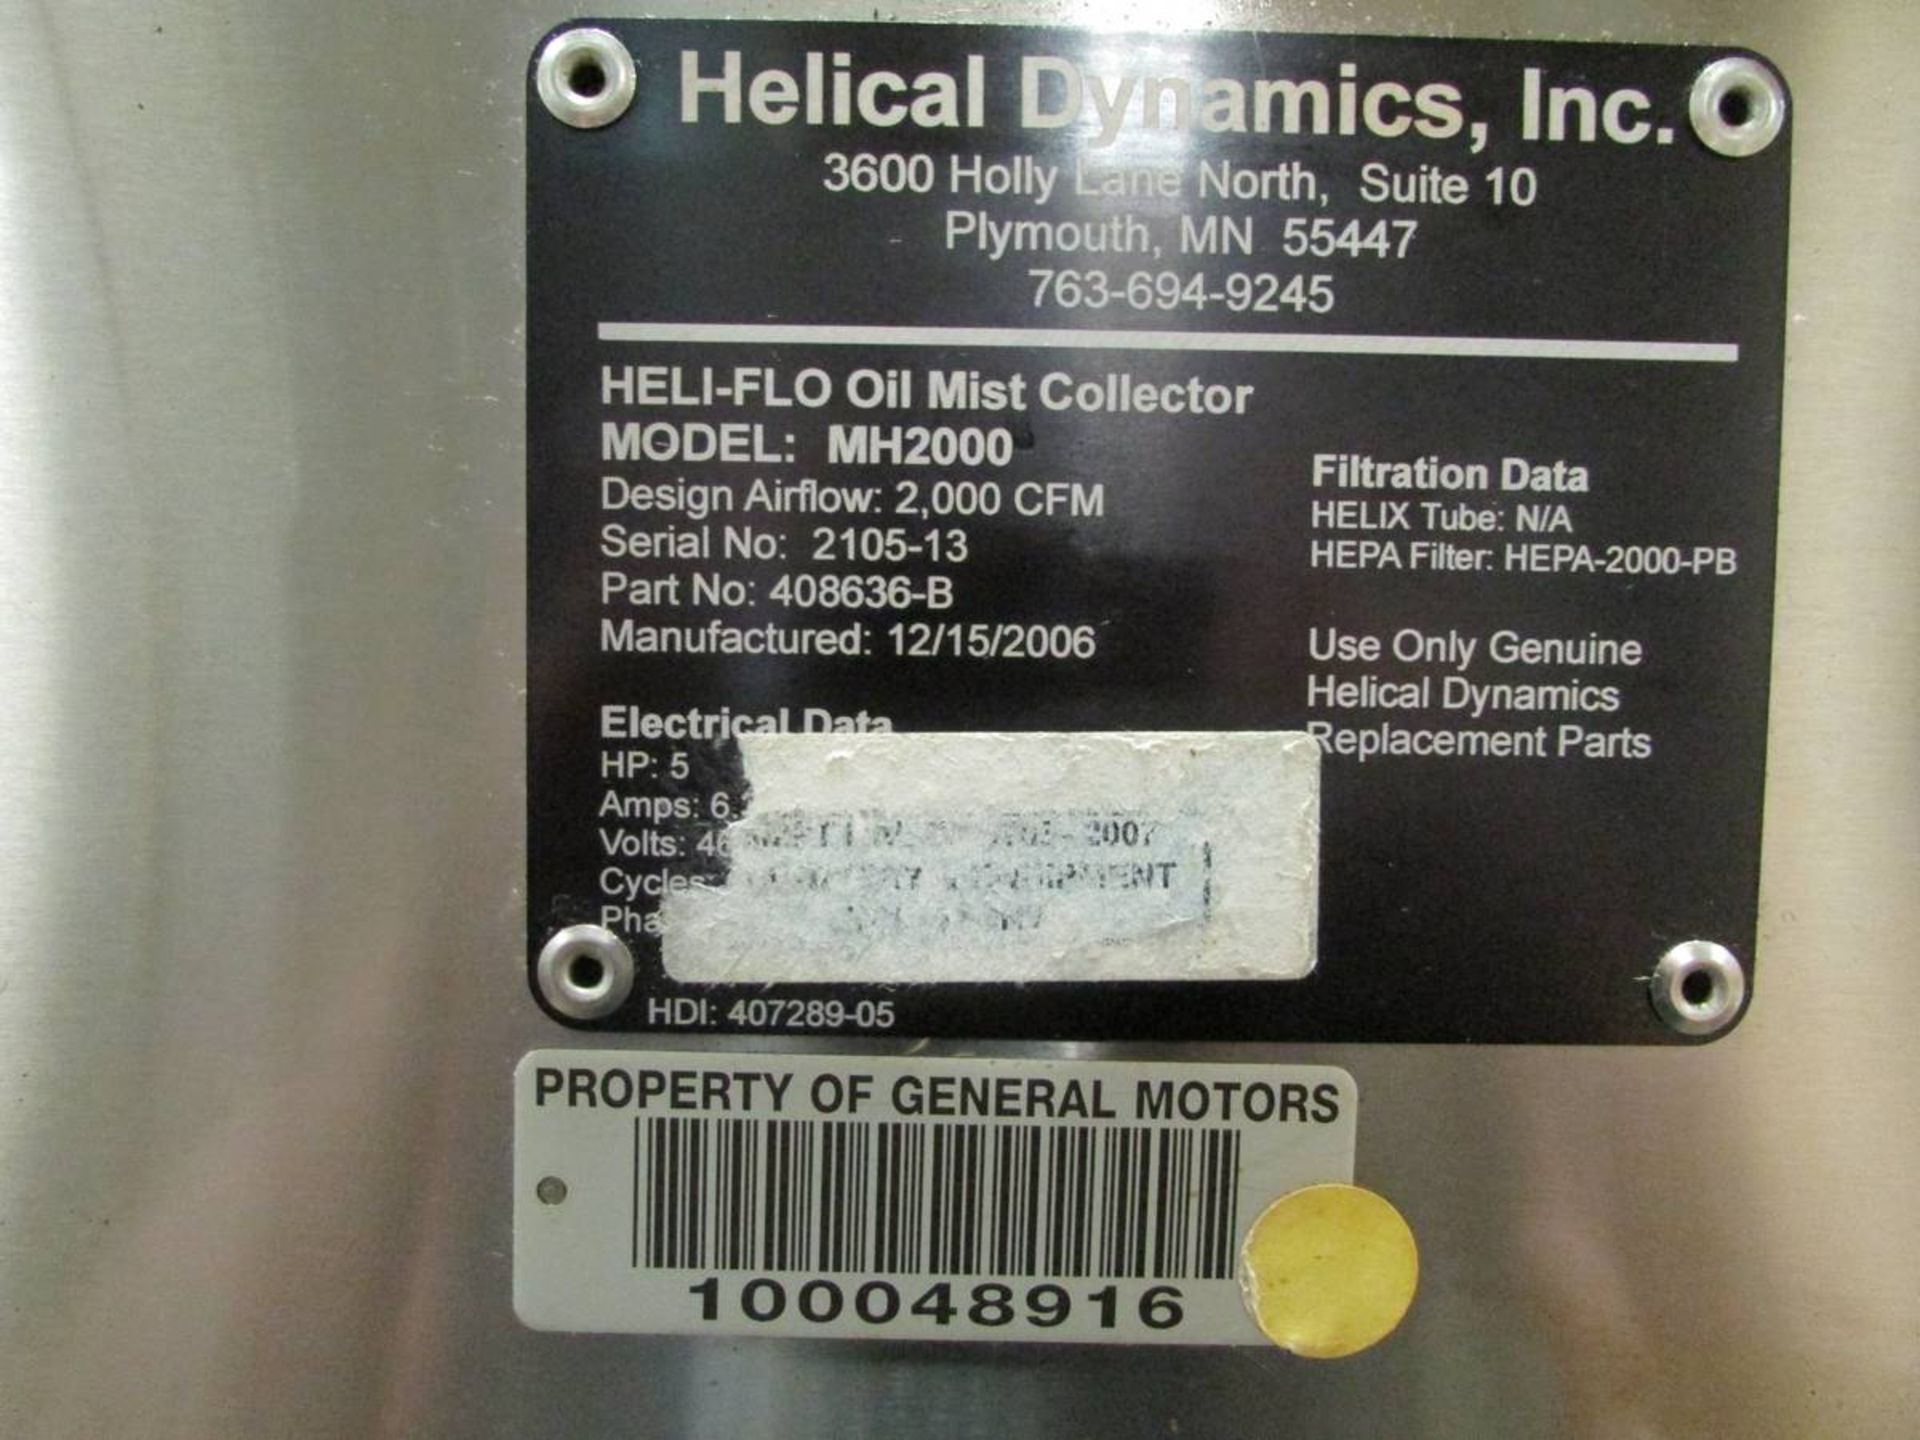 2006 Hilical Dynamics Inc. MH2000 Heli-Flo Oil Mist Collector - Image 5 of 5